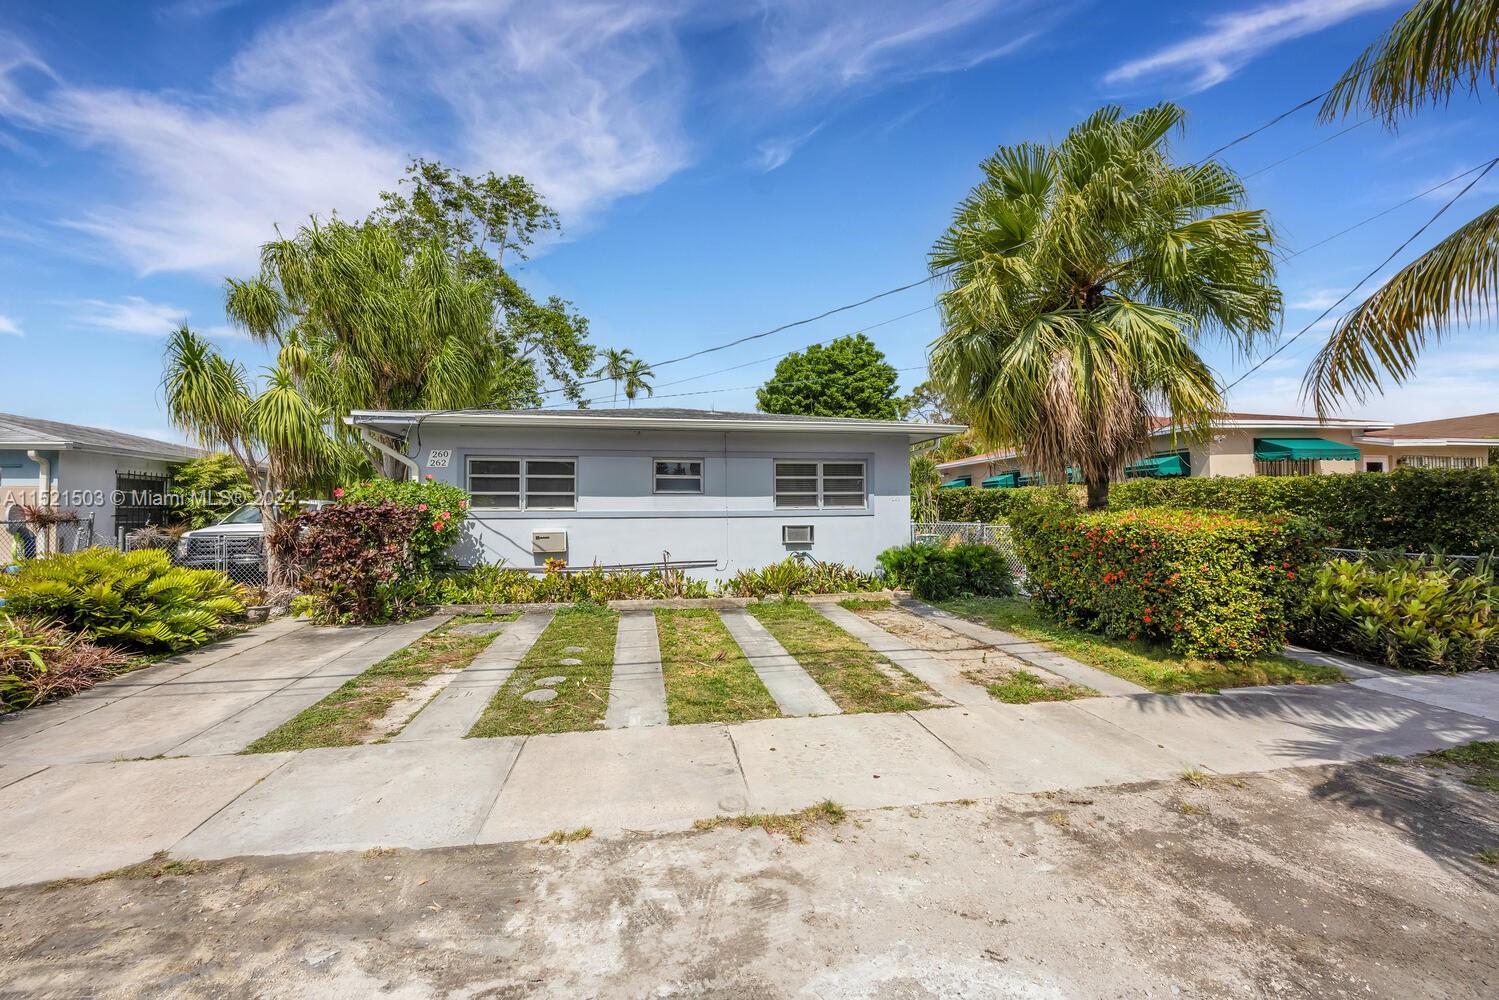 Rental Property at 260 Sw 31st Ct, Miami, Broward County, Florida -  - $949,000 MO.